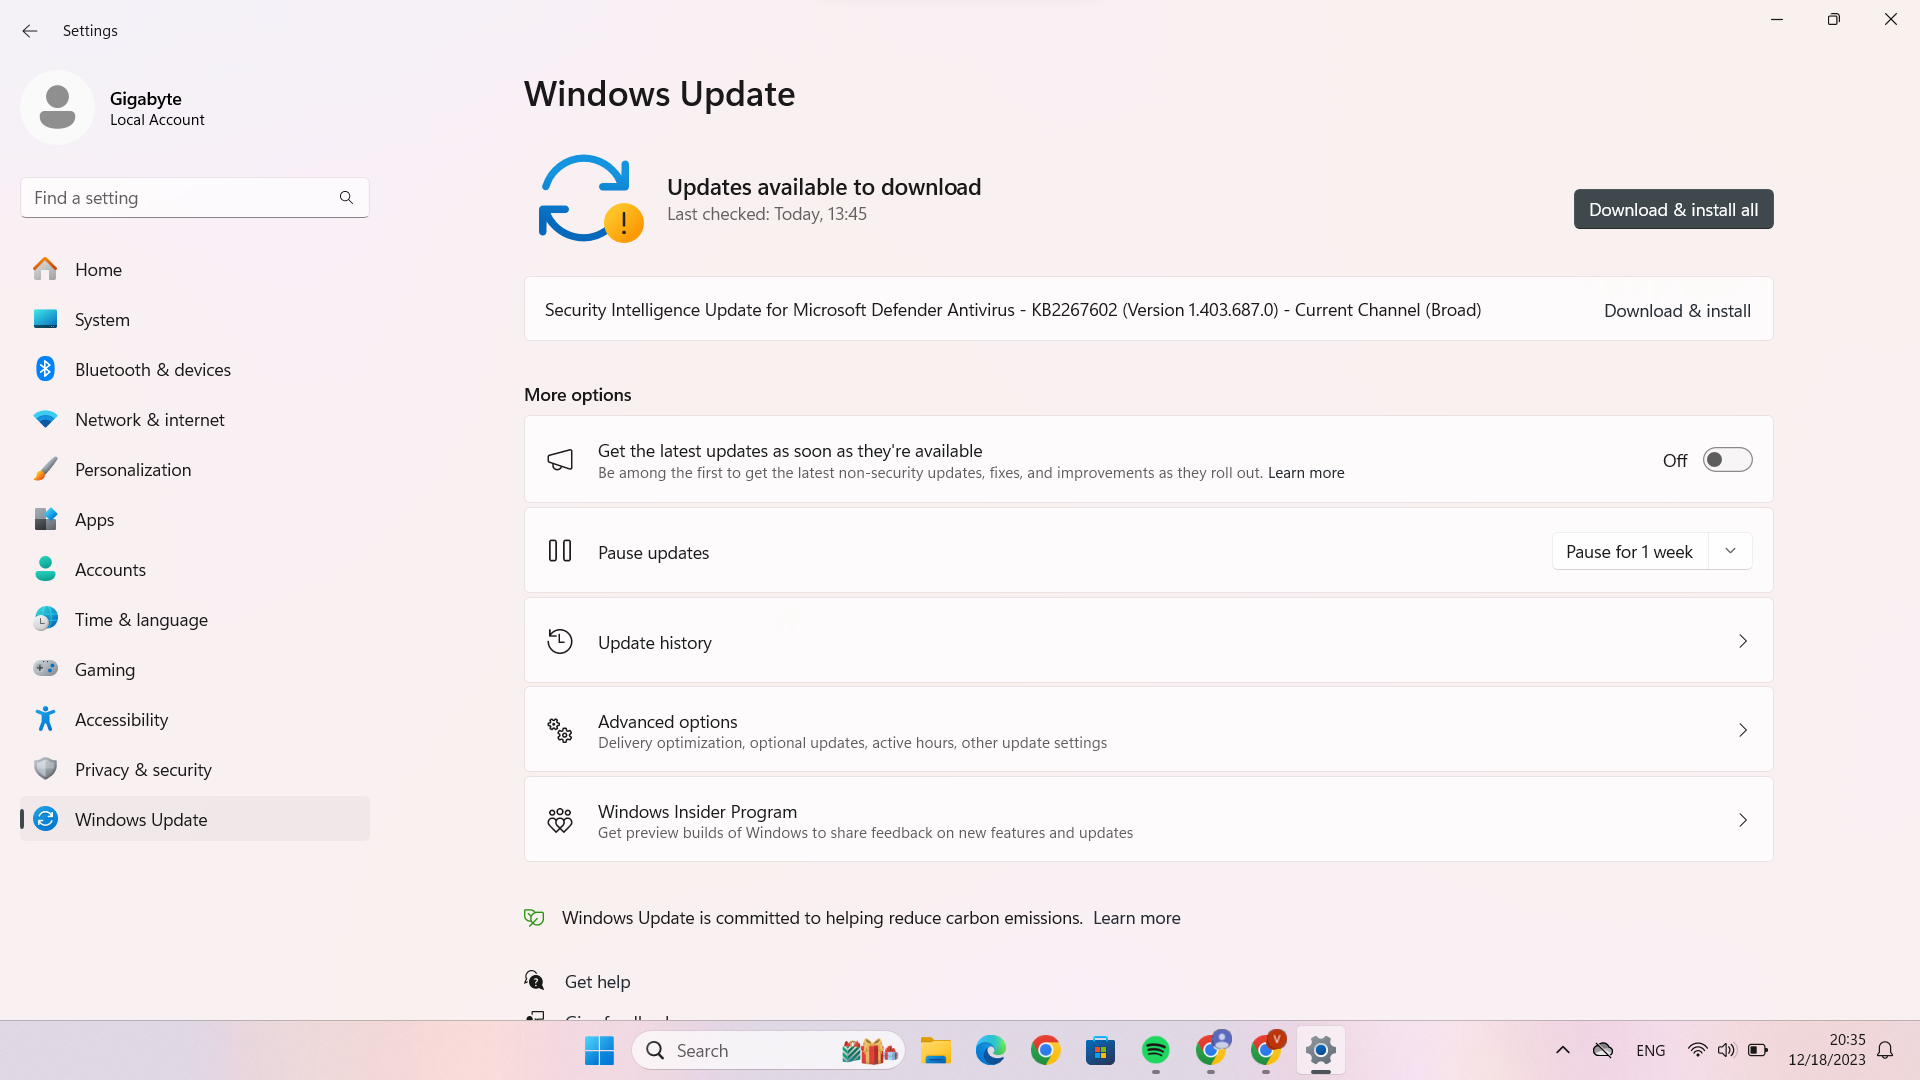 Windows update download &amp; install